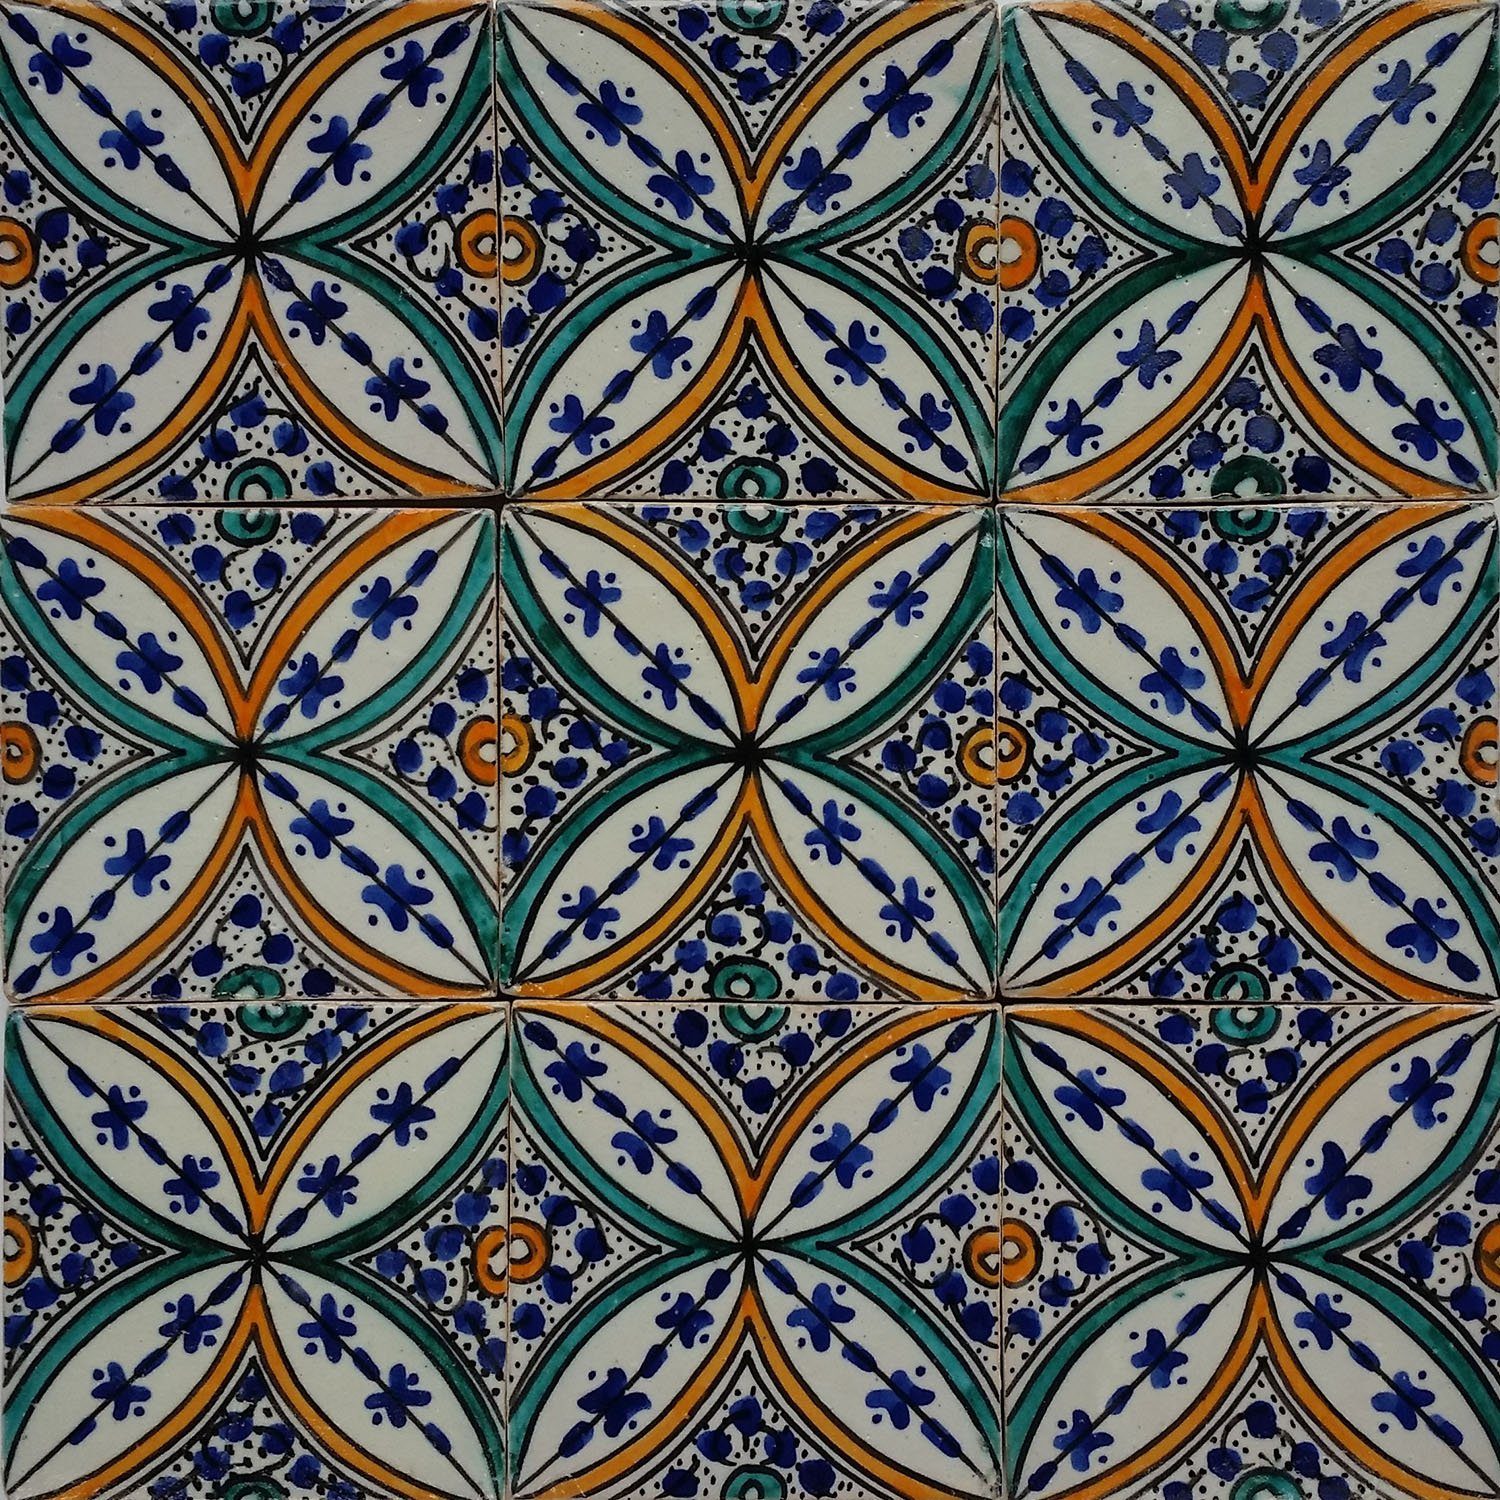 Casa Moro Wandfliese Marokkanische handbemalte Keramikfliese Saba 10x10 cm bunt, HBF8022, Mehrfarbig, Handgefertigt, Handbemalt